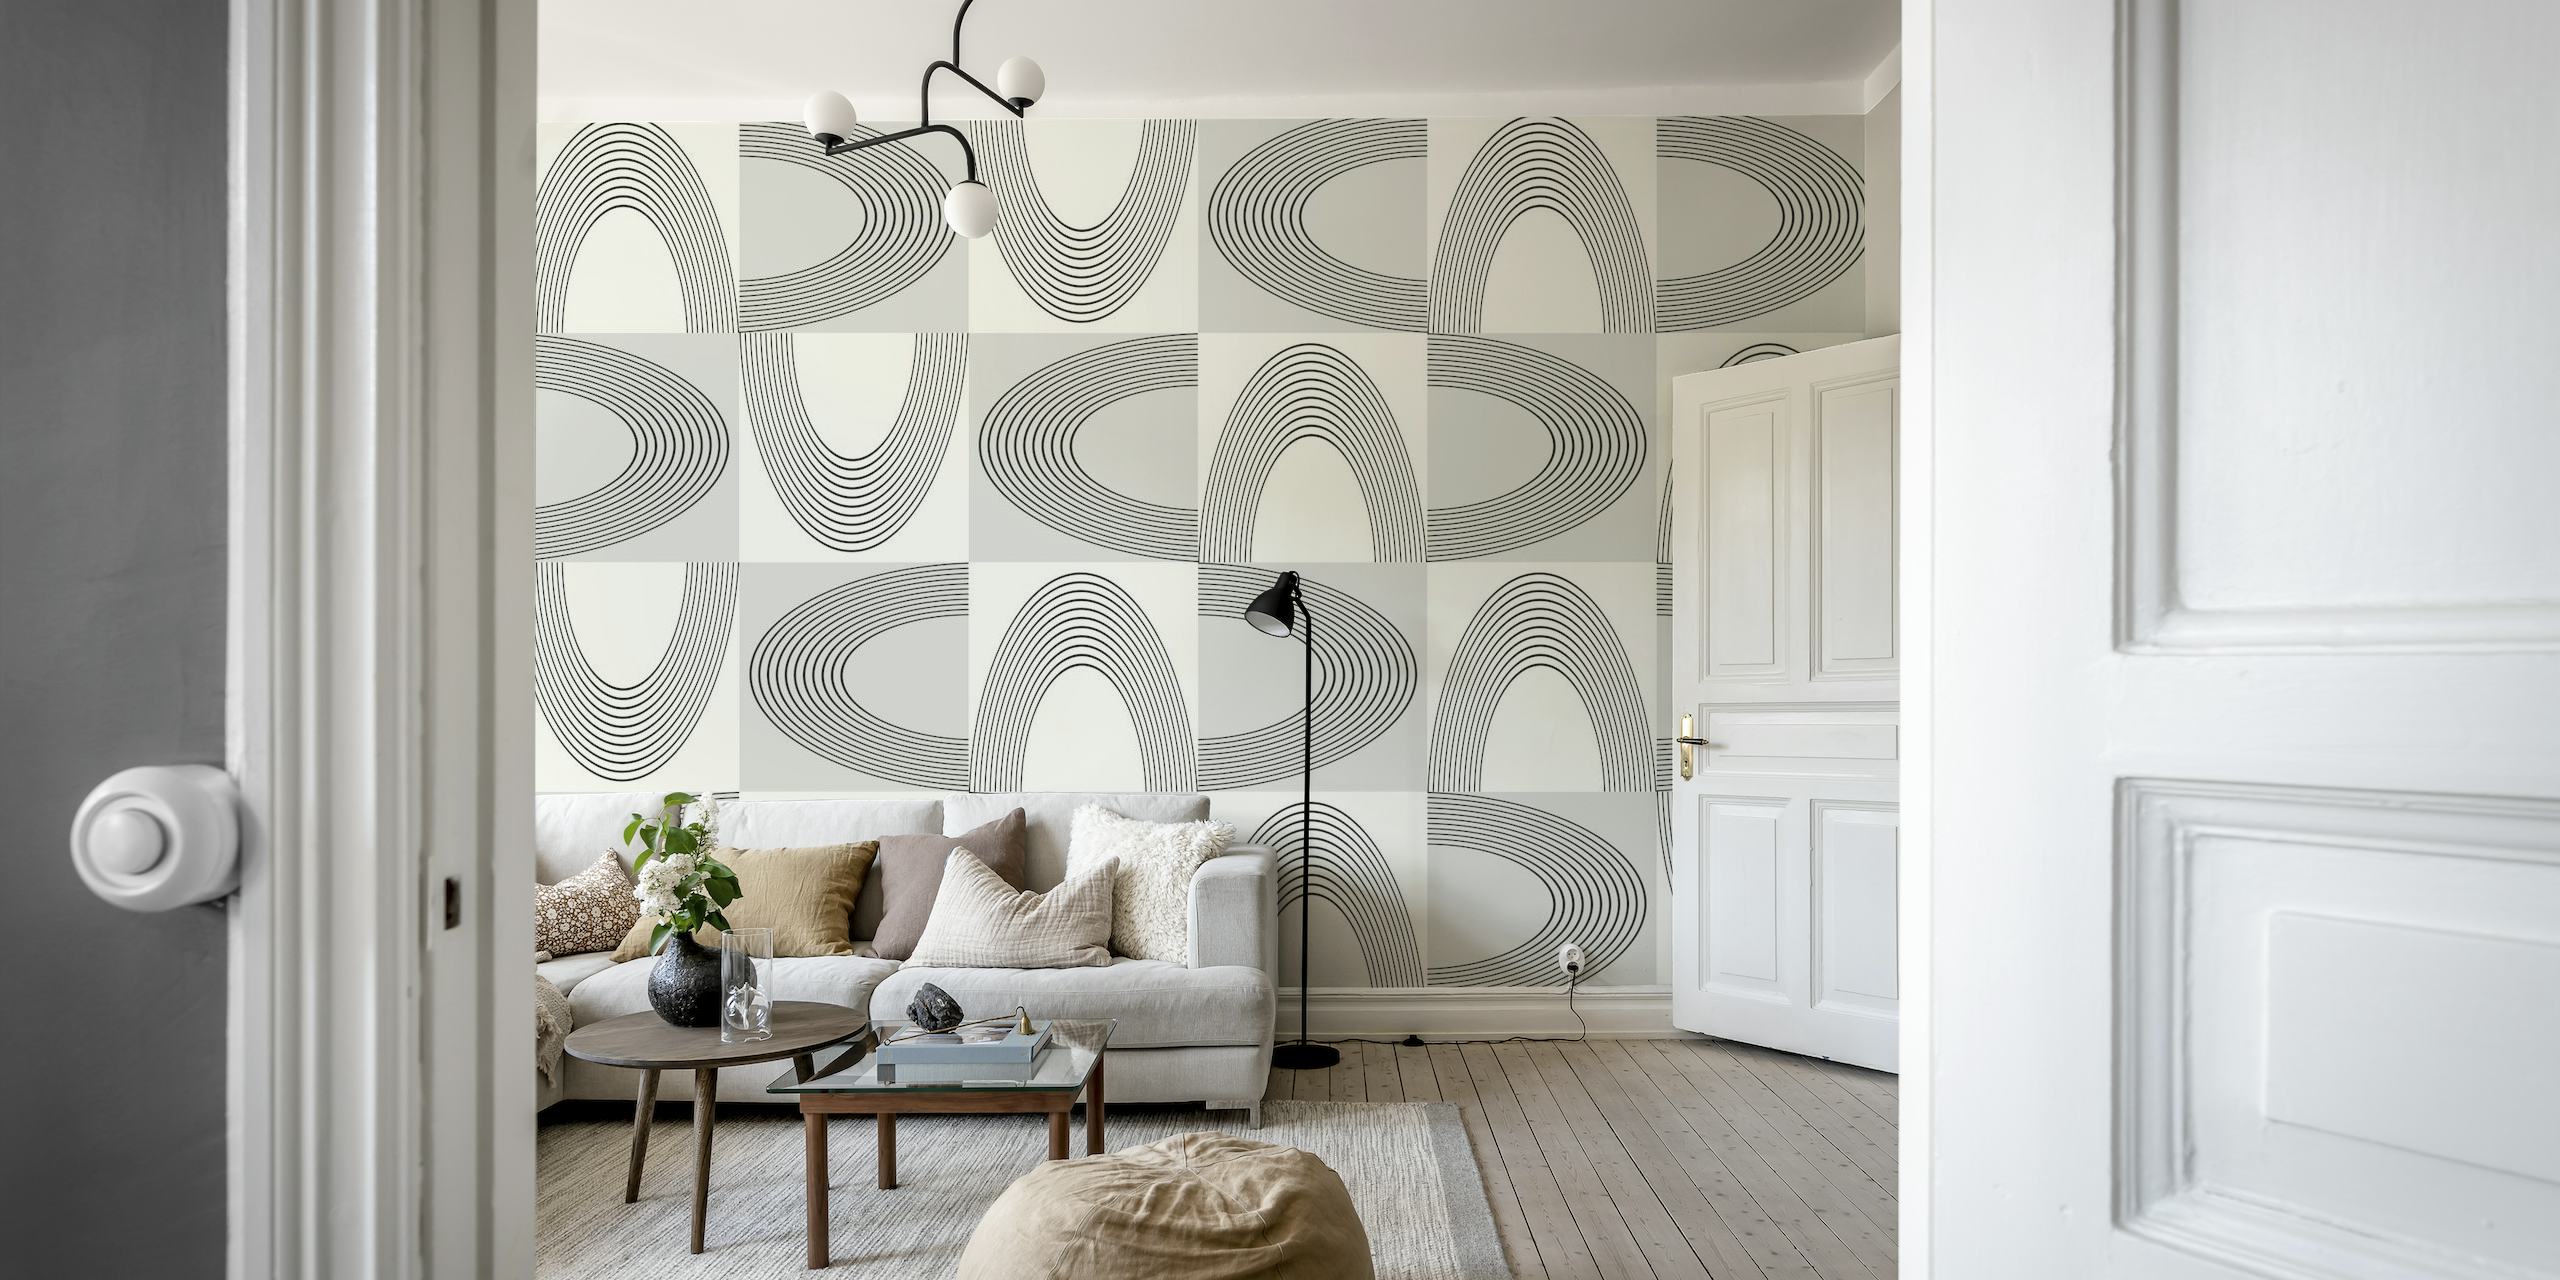 Fotomural vinílico de parede geométrico abstrato vintage com formas interligadas em cinza e branco sujo